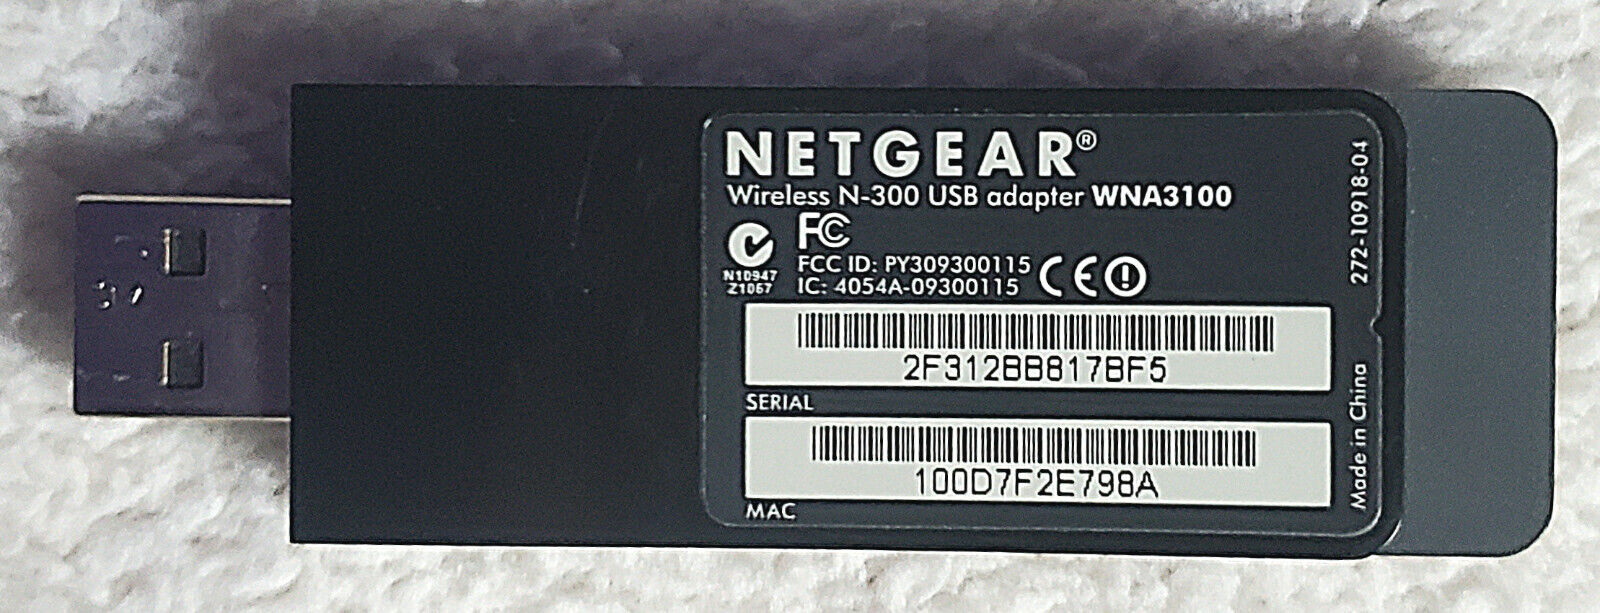 NetGear N-300 USB Wireless Adapter ~USB ADAPTER ONLY~ (WNA3100)